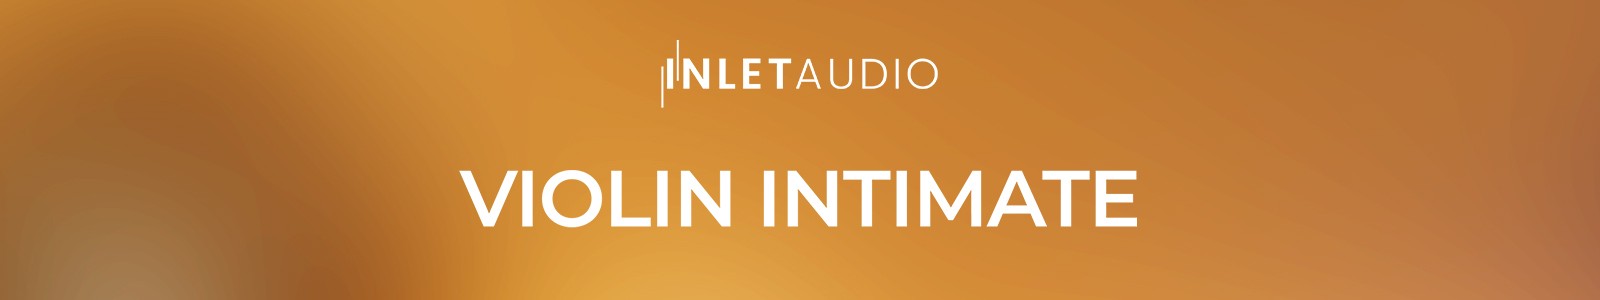 Inlet Audio Violin Intimate